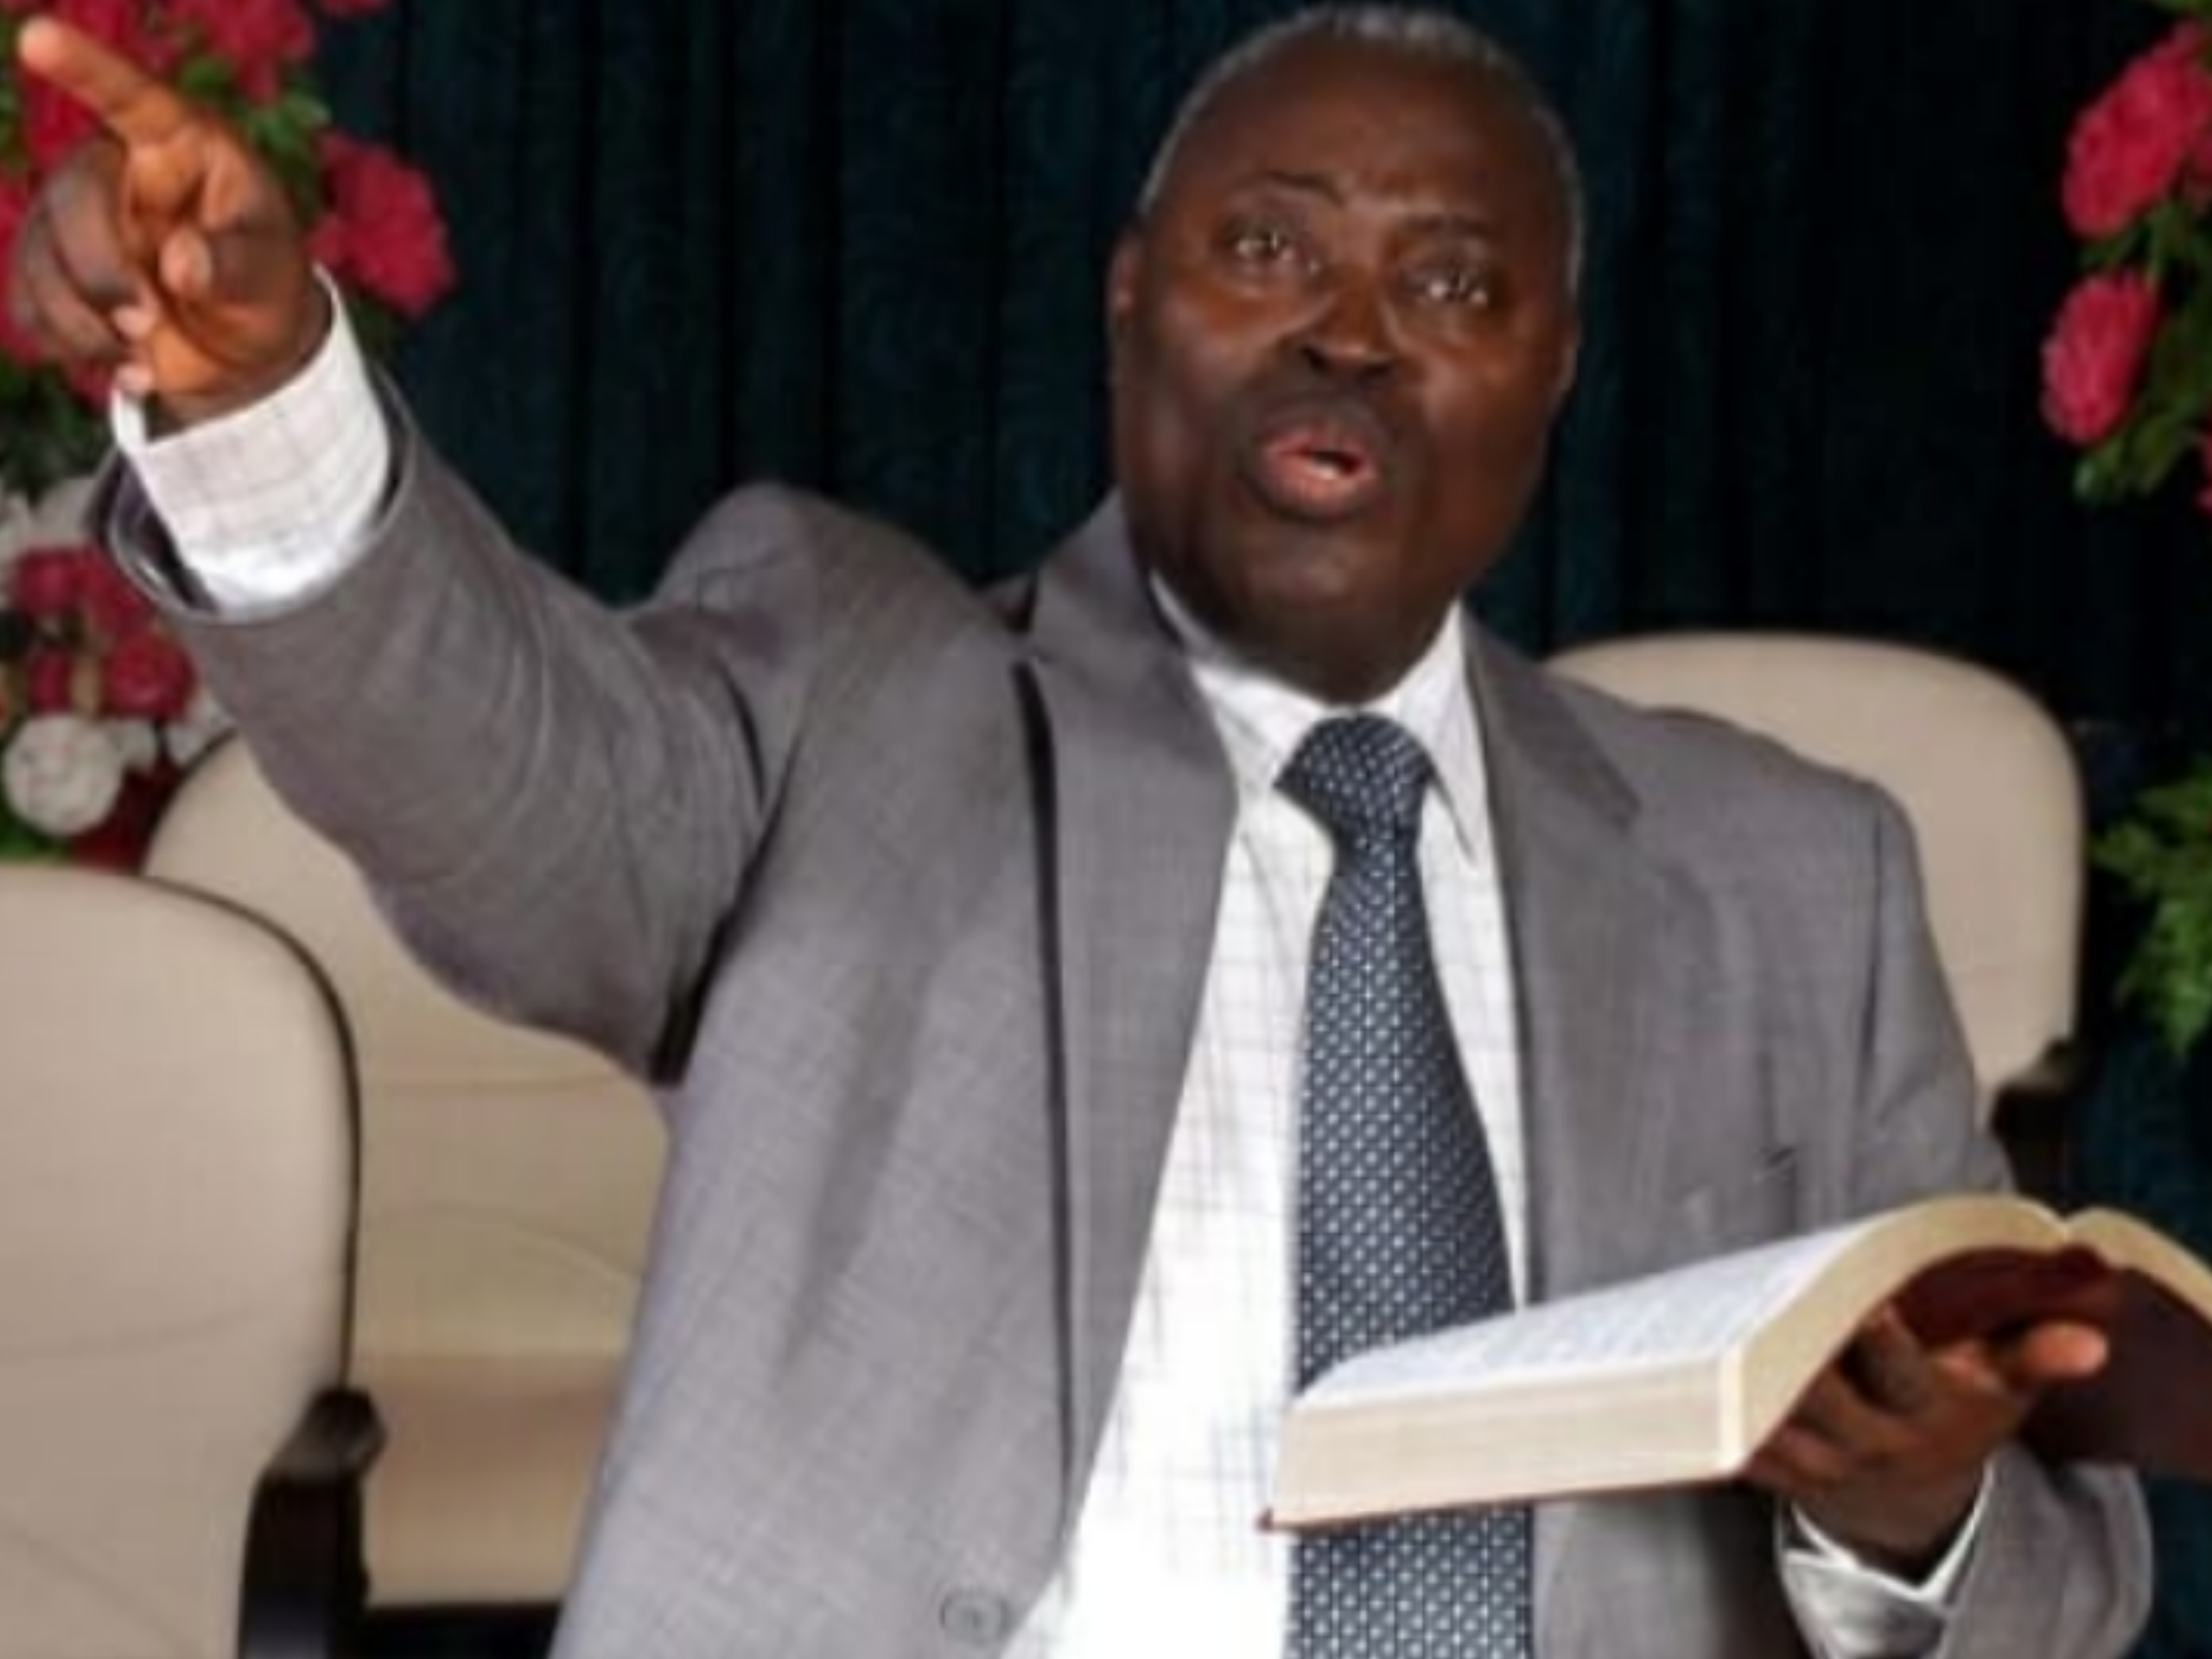 Do not disrespect failed leaders, Kumuyi tells genuine believers